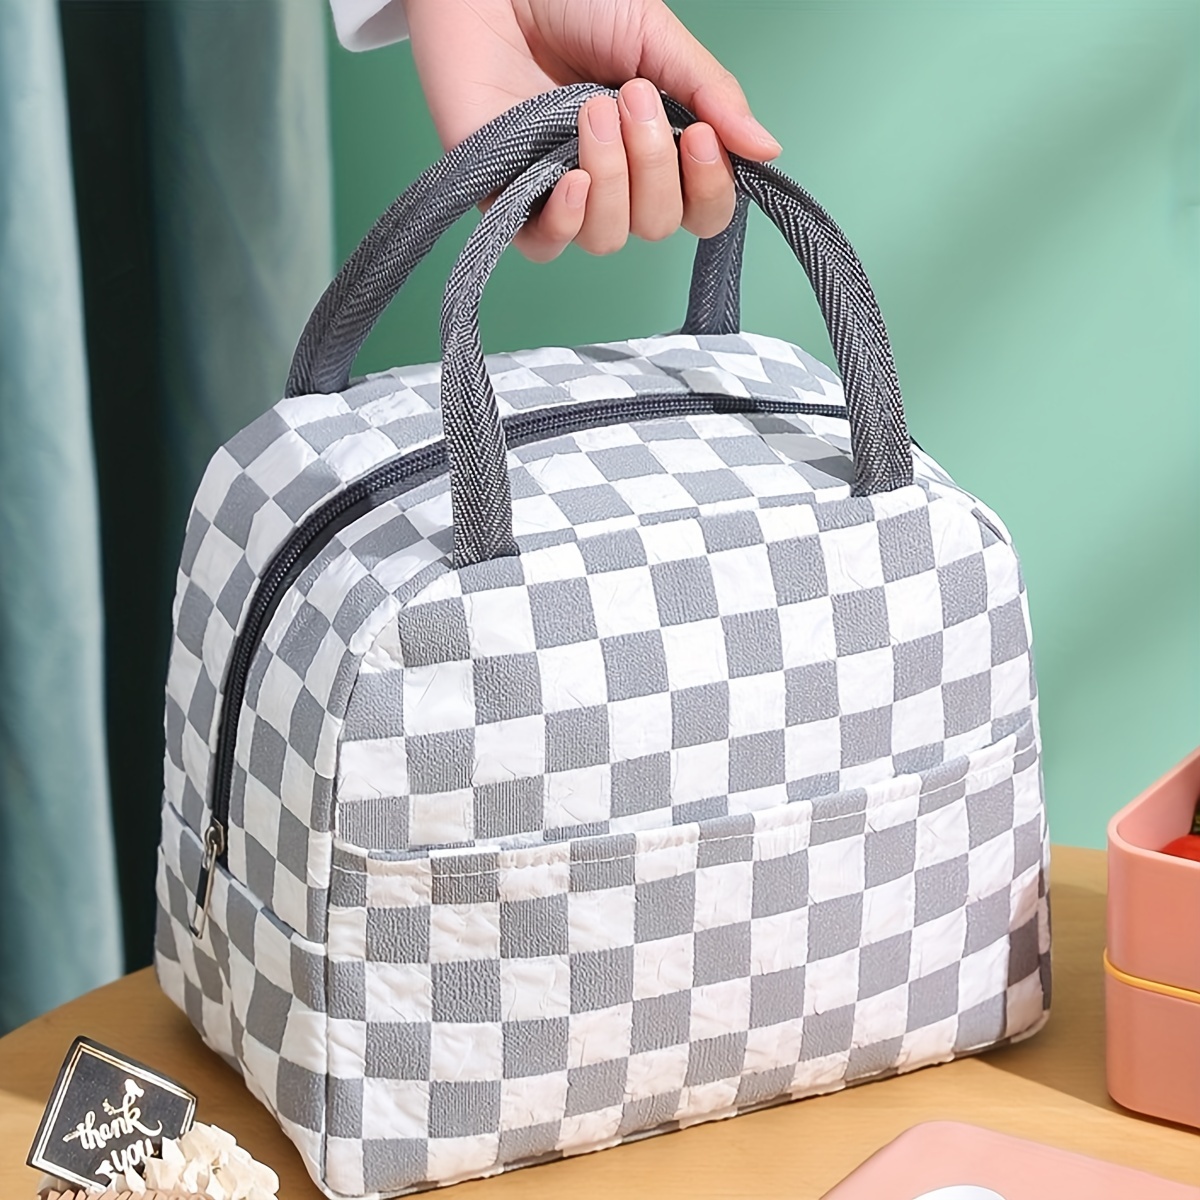 Does Louis Vuitton Make a Lunch Bag?